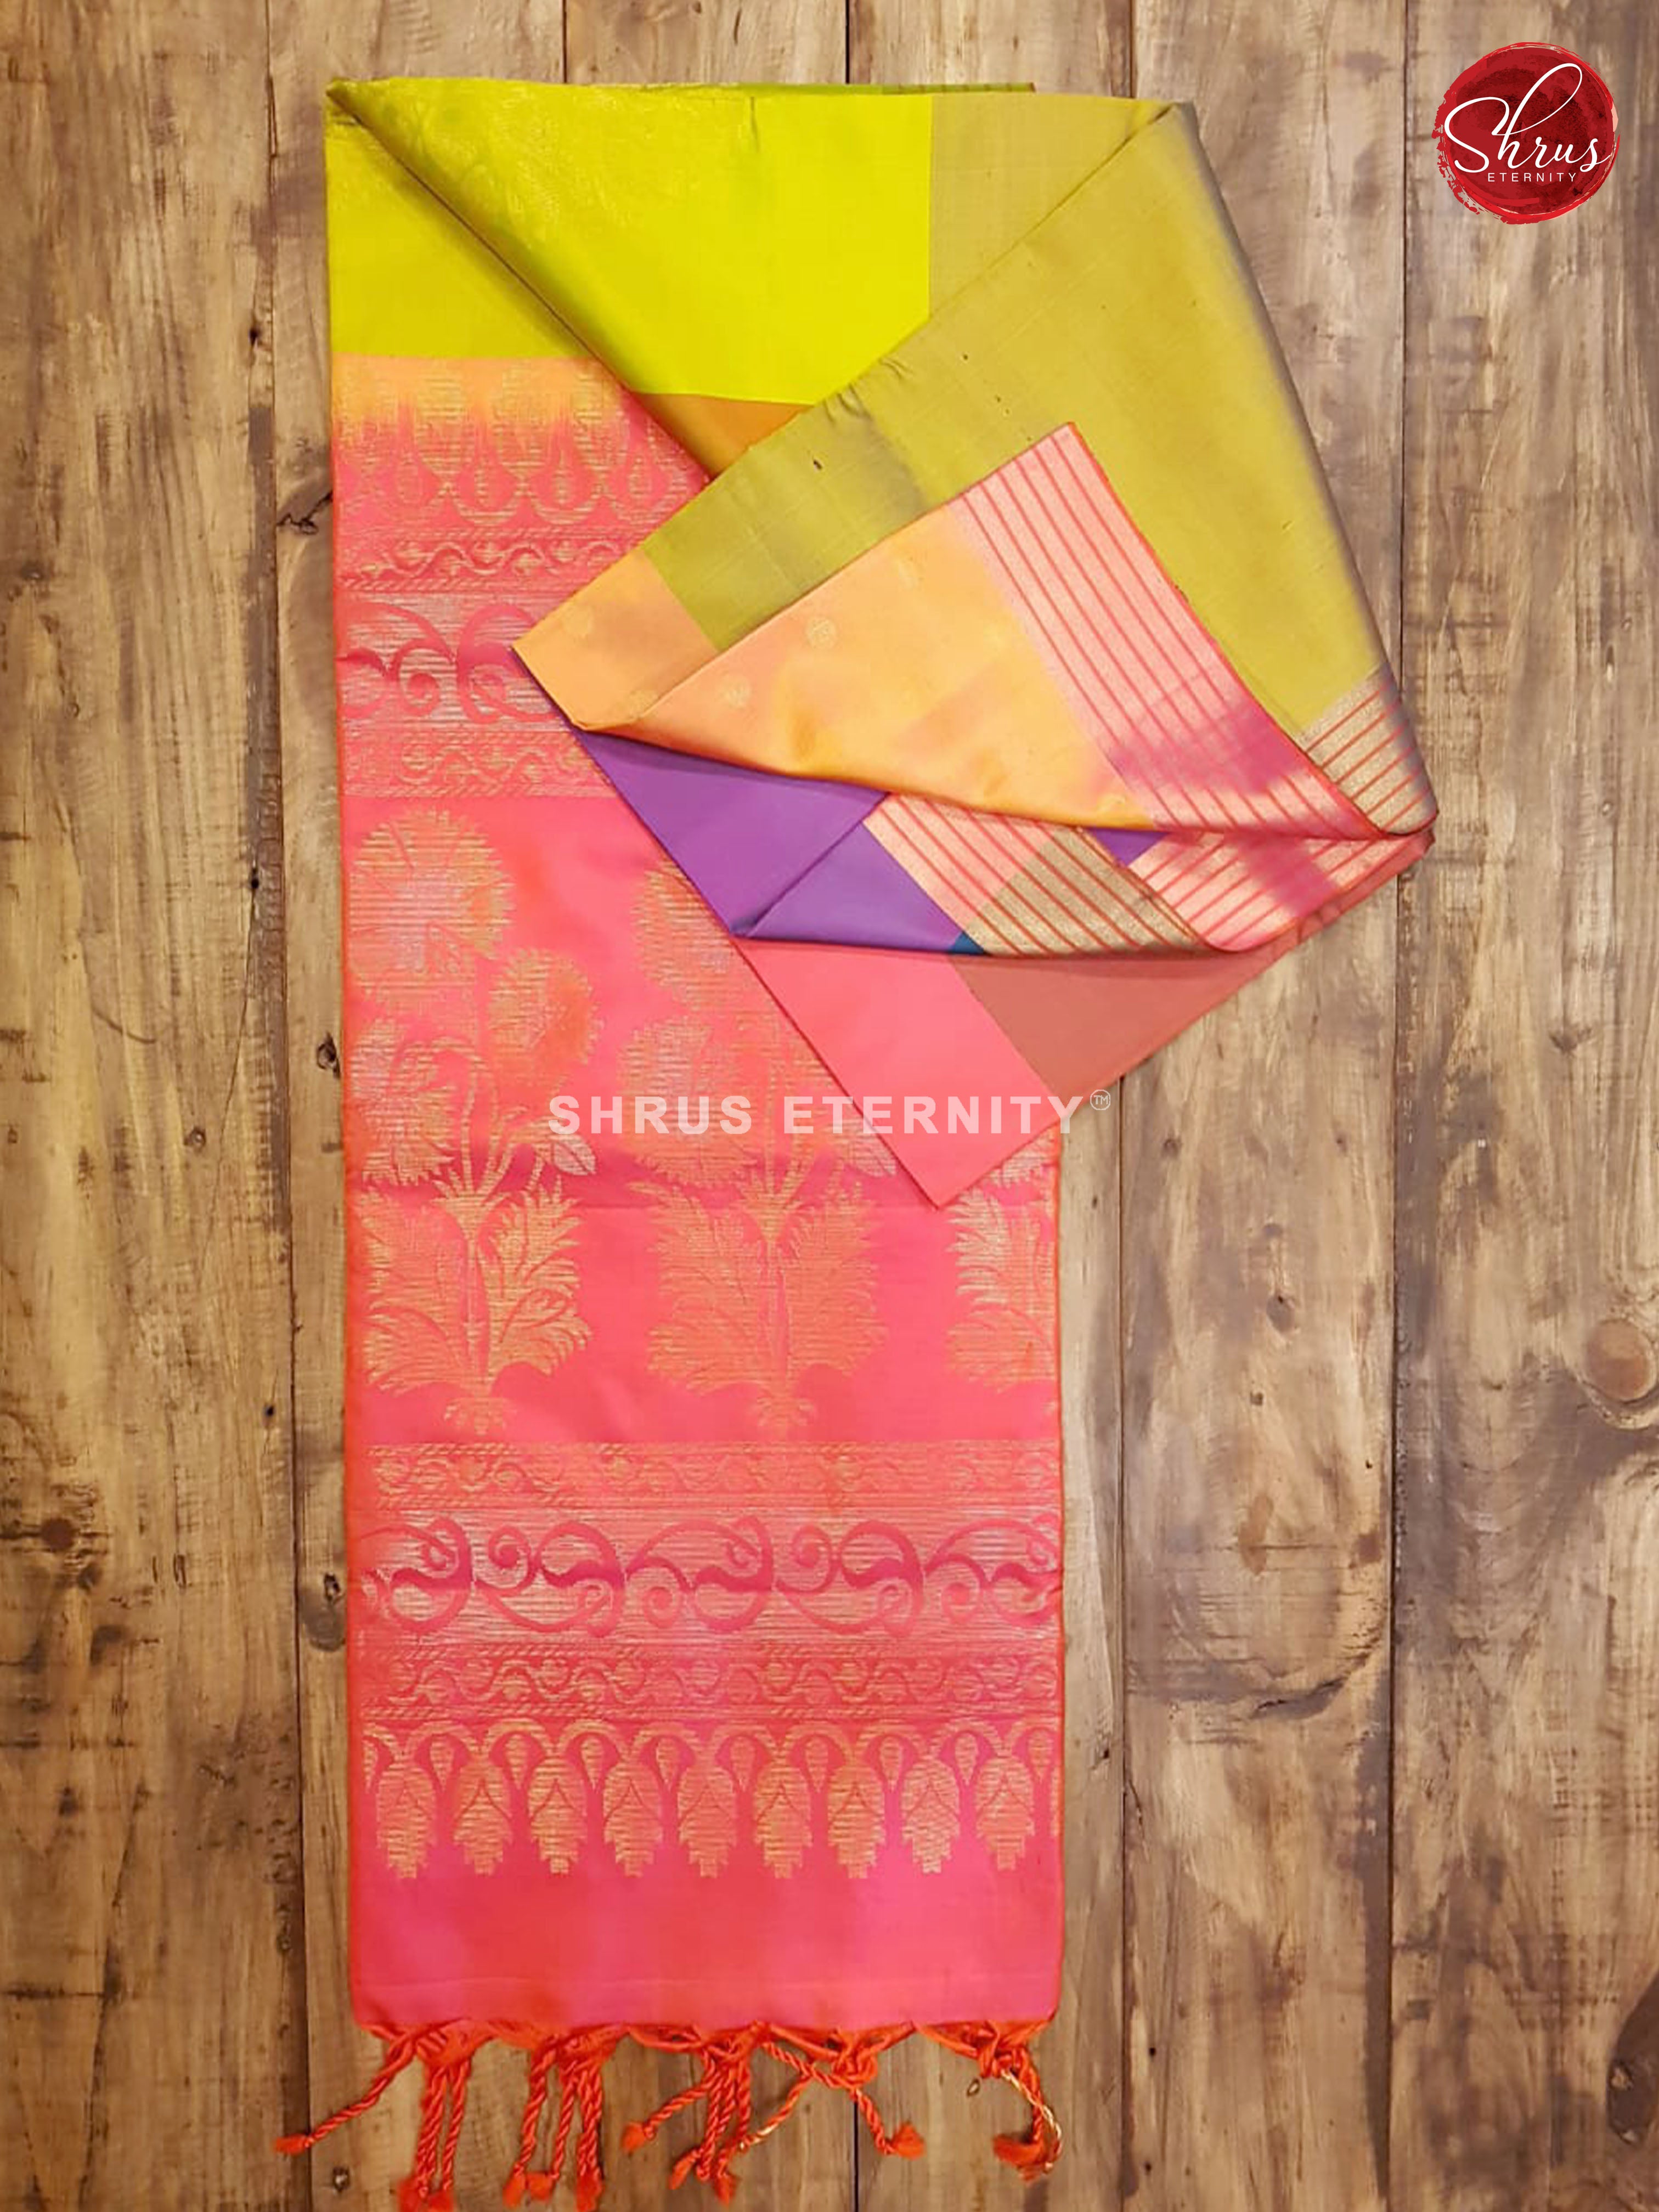 Multicolor &  Orangish Pink  - Soft Silk - Shop on ShrusEternity.com